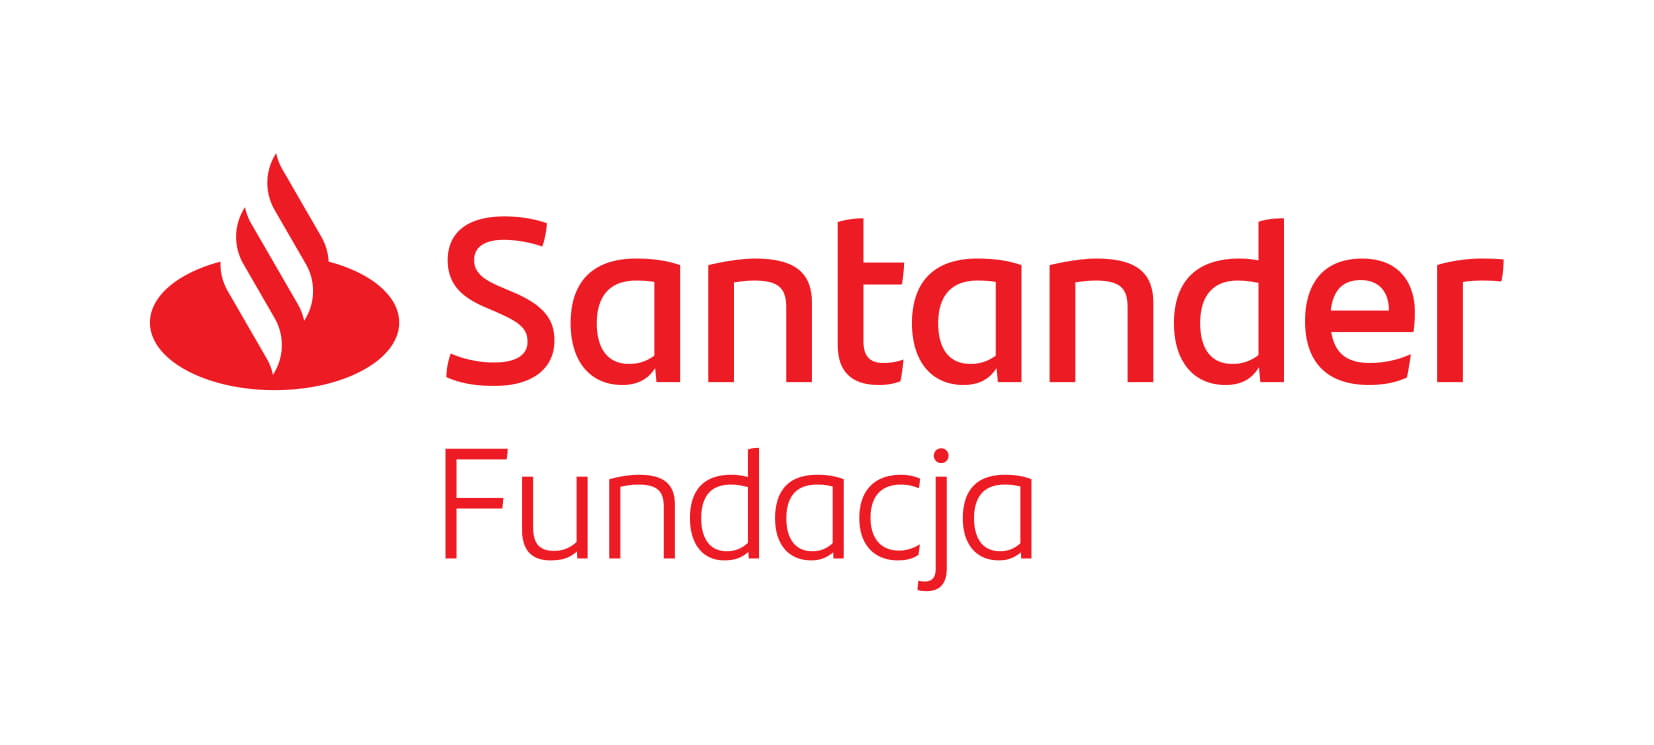 Santander fundacja CMYK 1